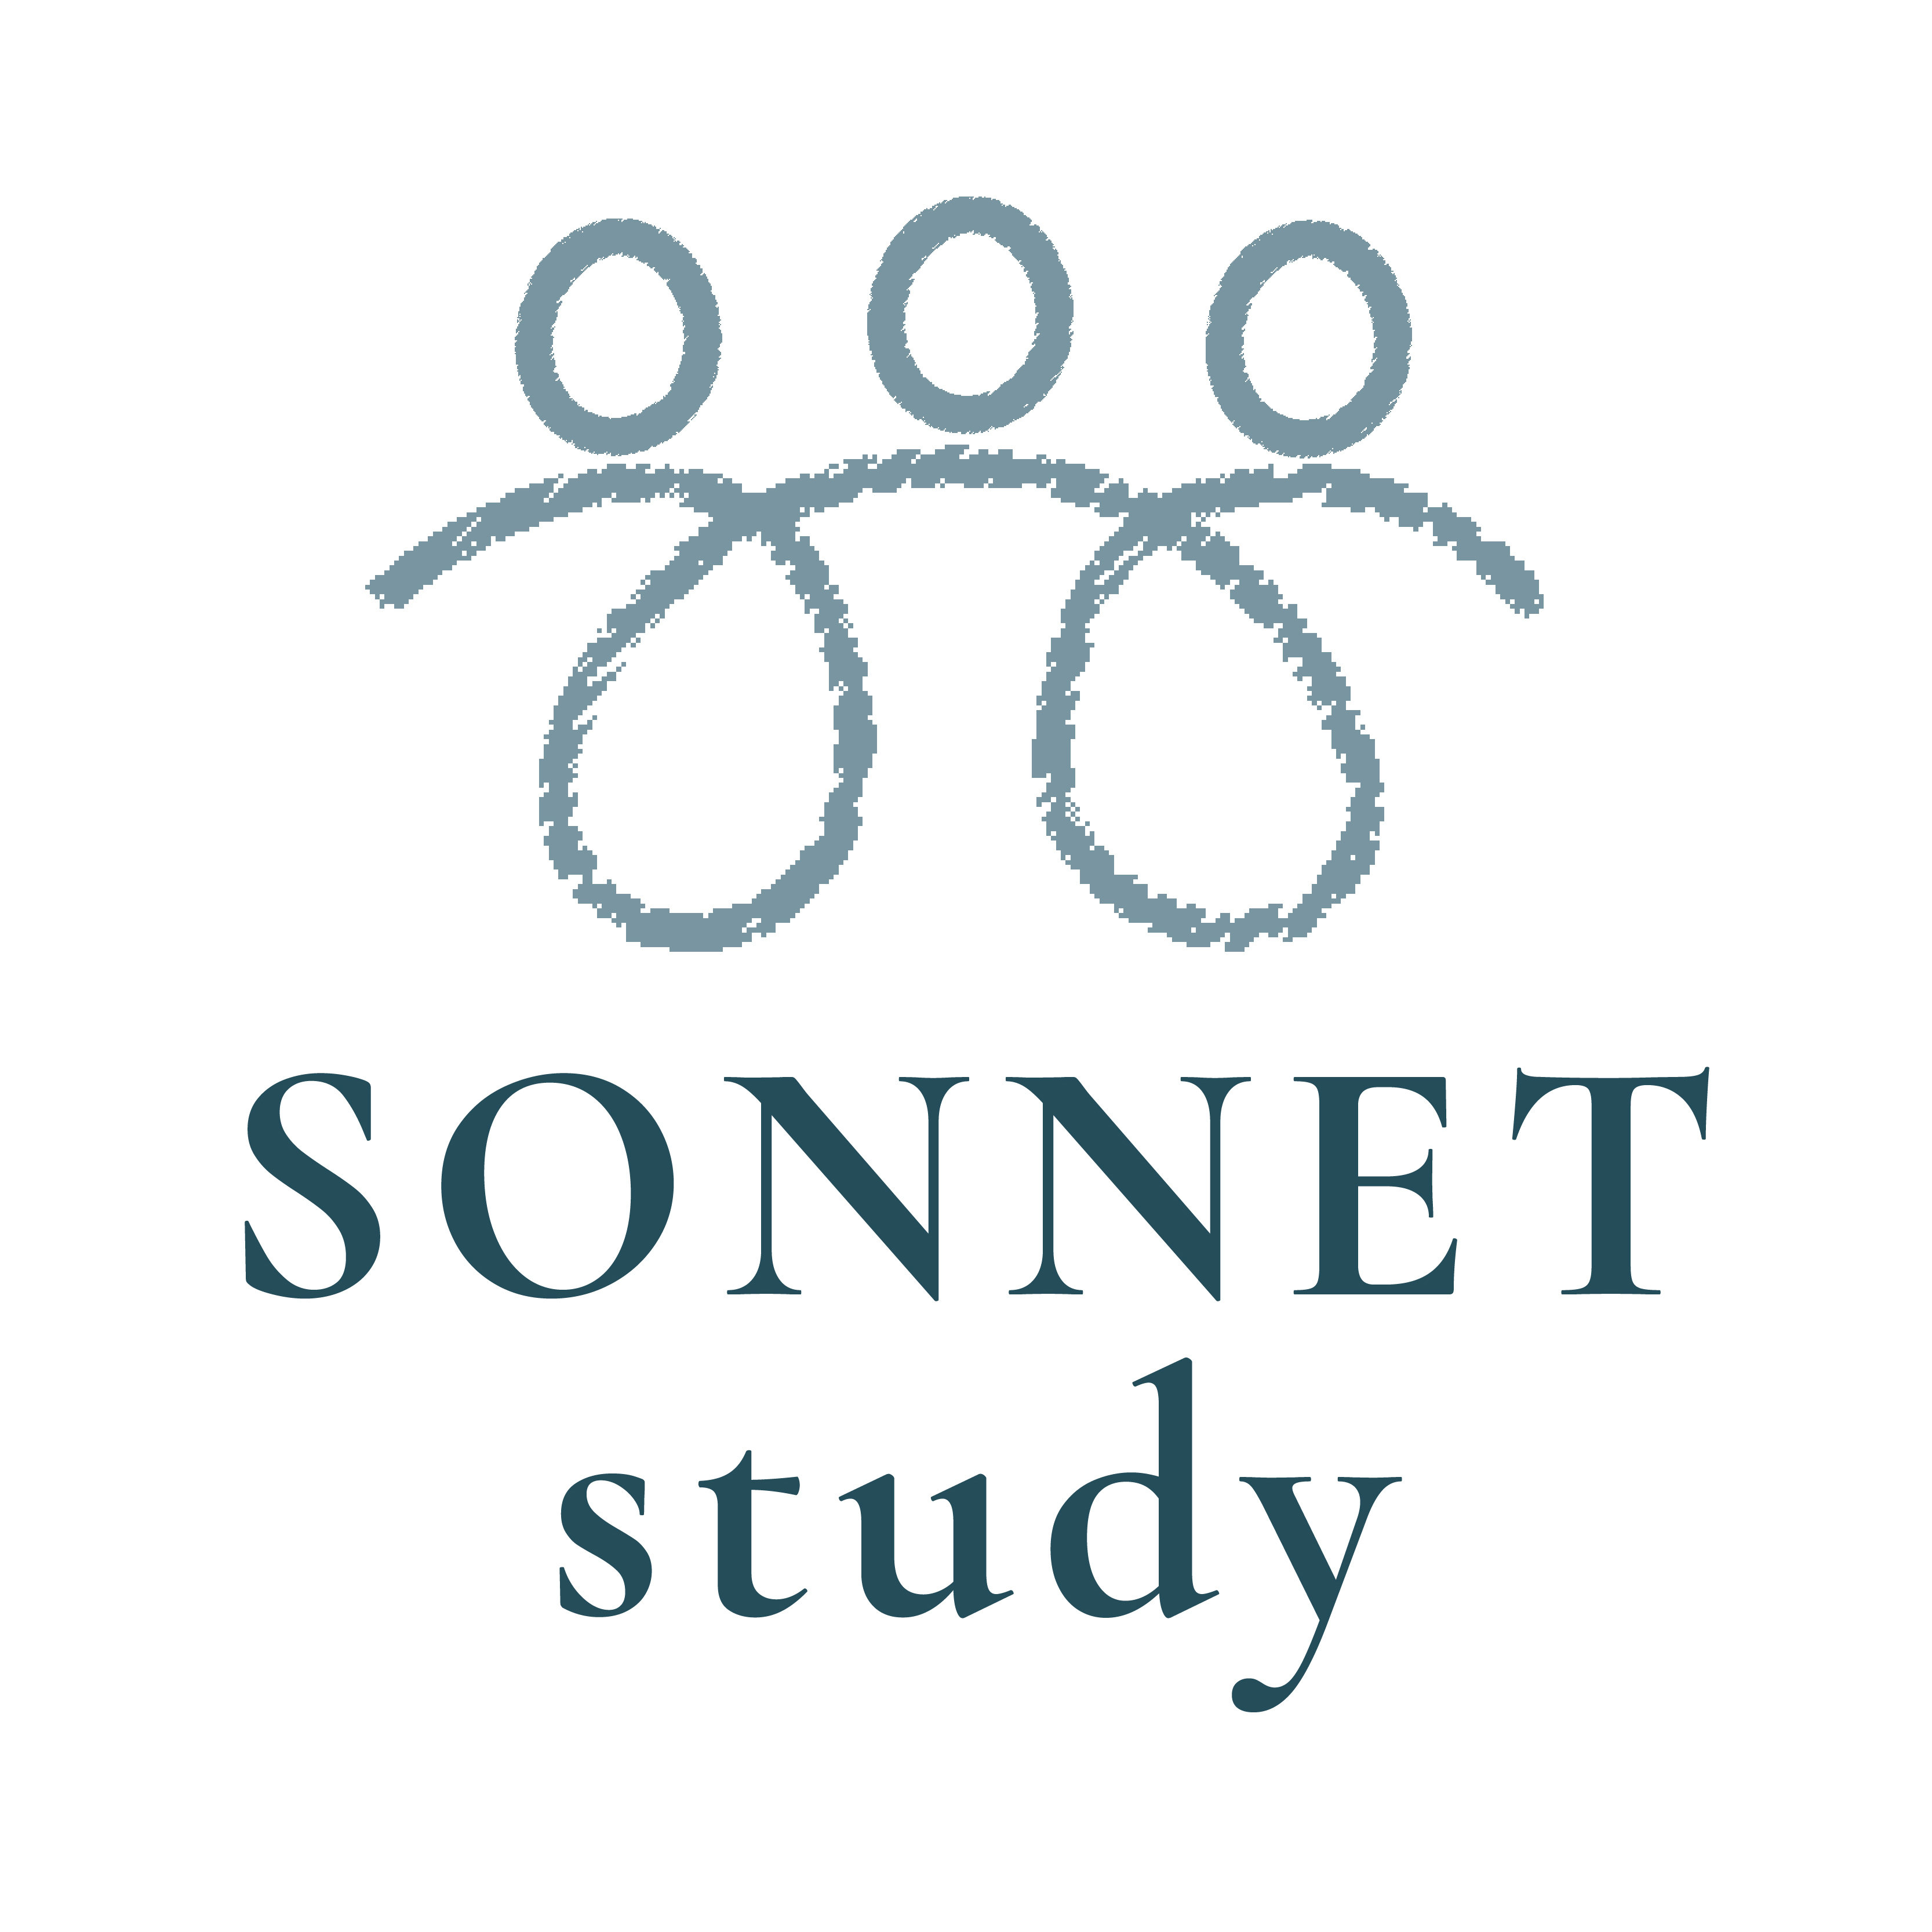 SONNET Study logo